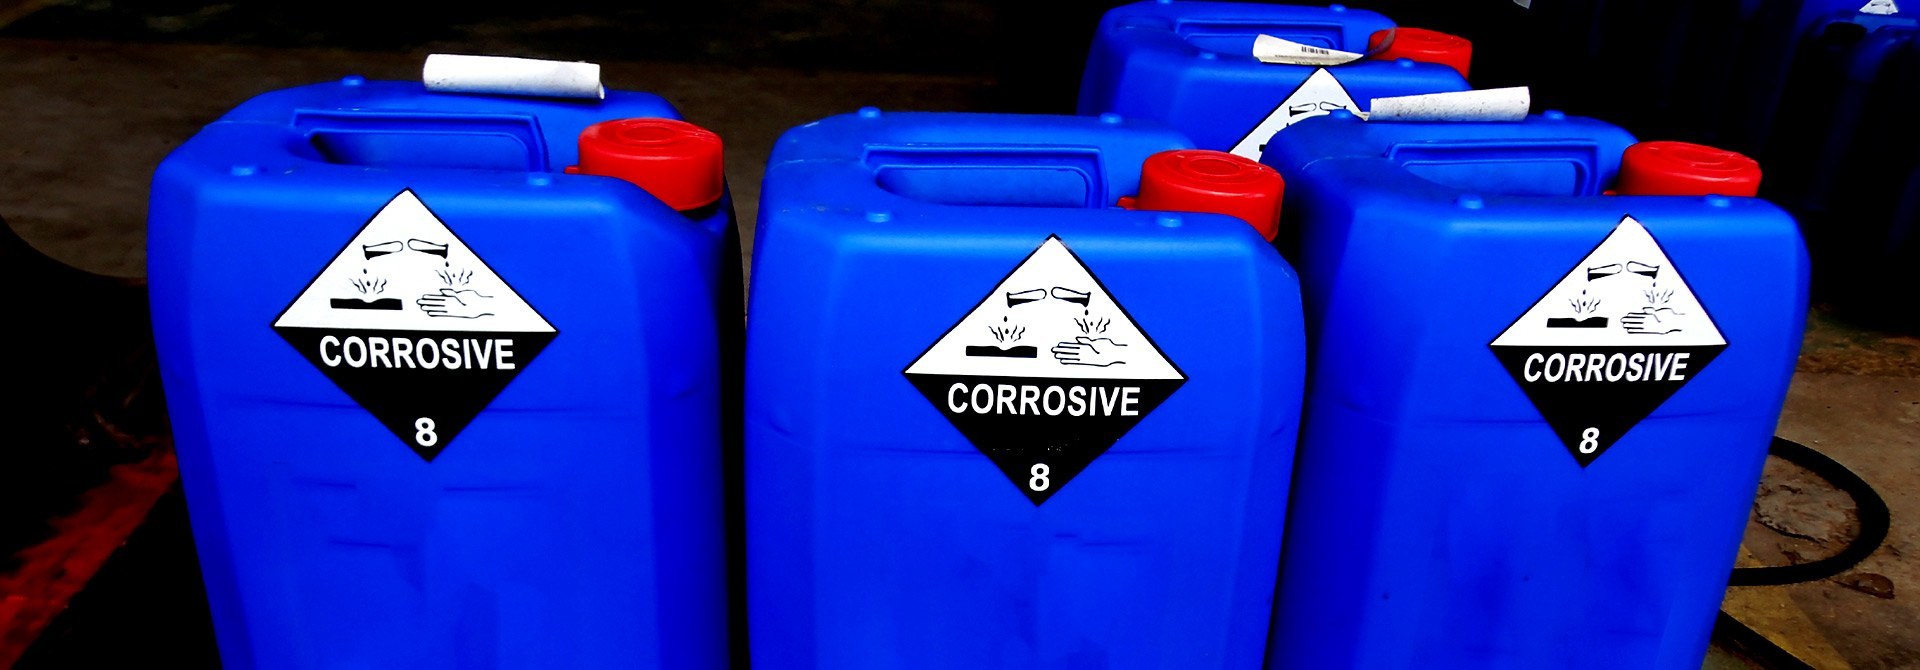 gallons of corrosive liquid